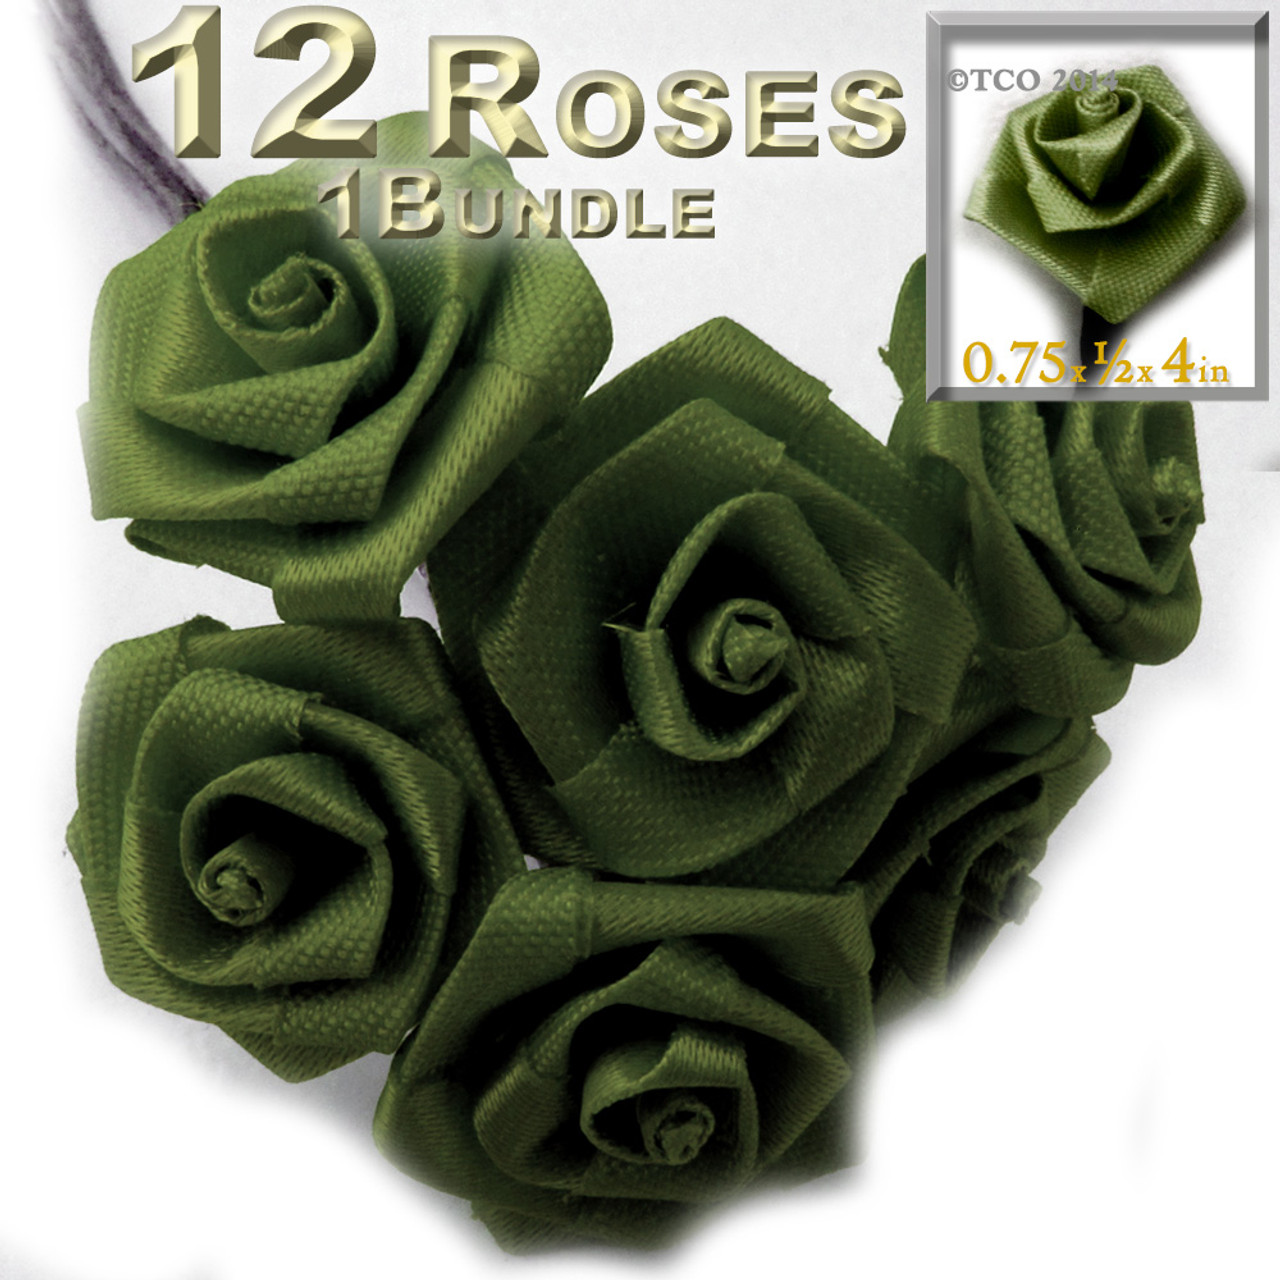 NEW – RIBROS-M-300 – 3/4″ Cream Flat Ribbon Roses – Last set of 10